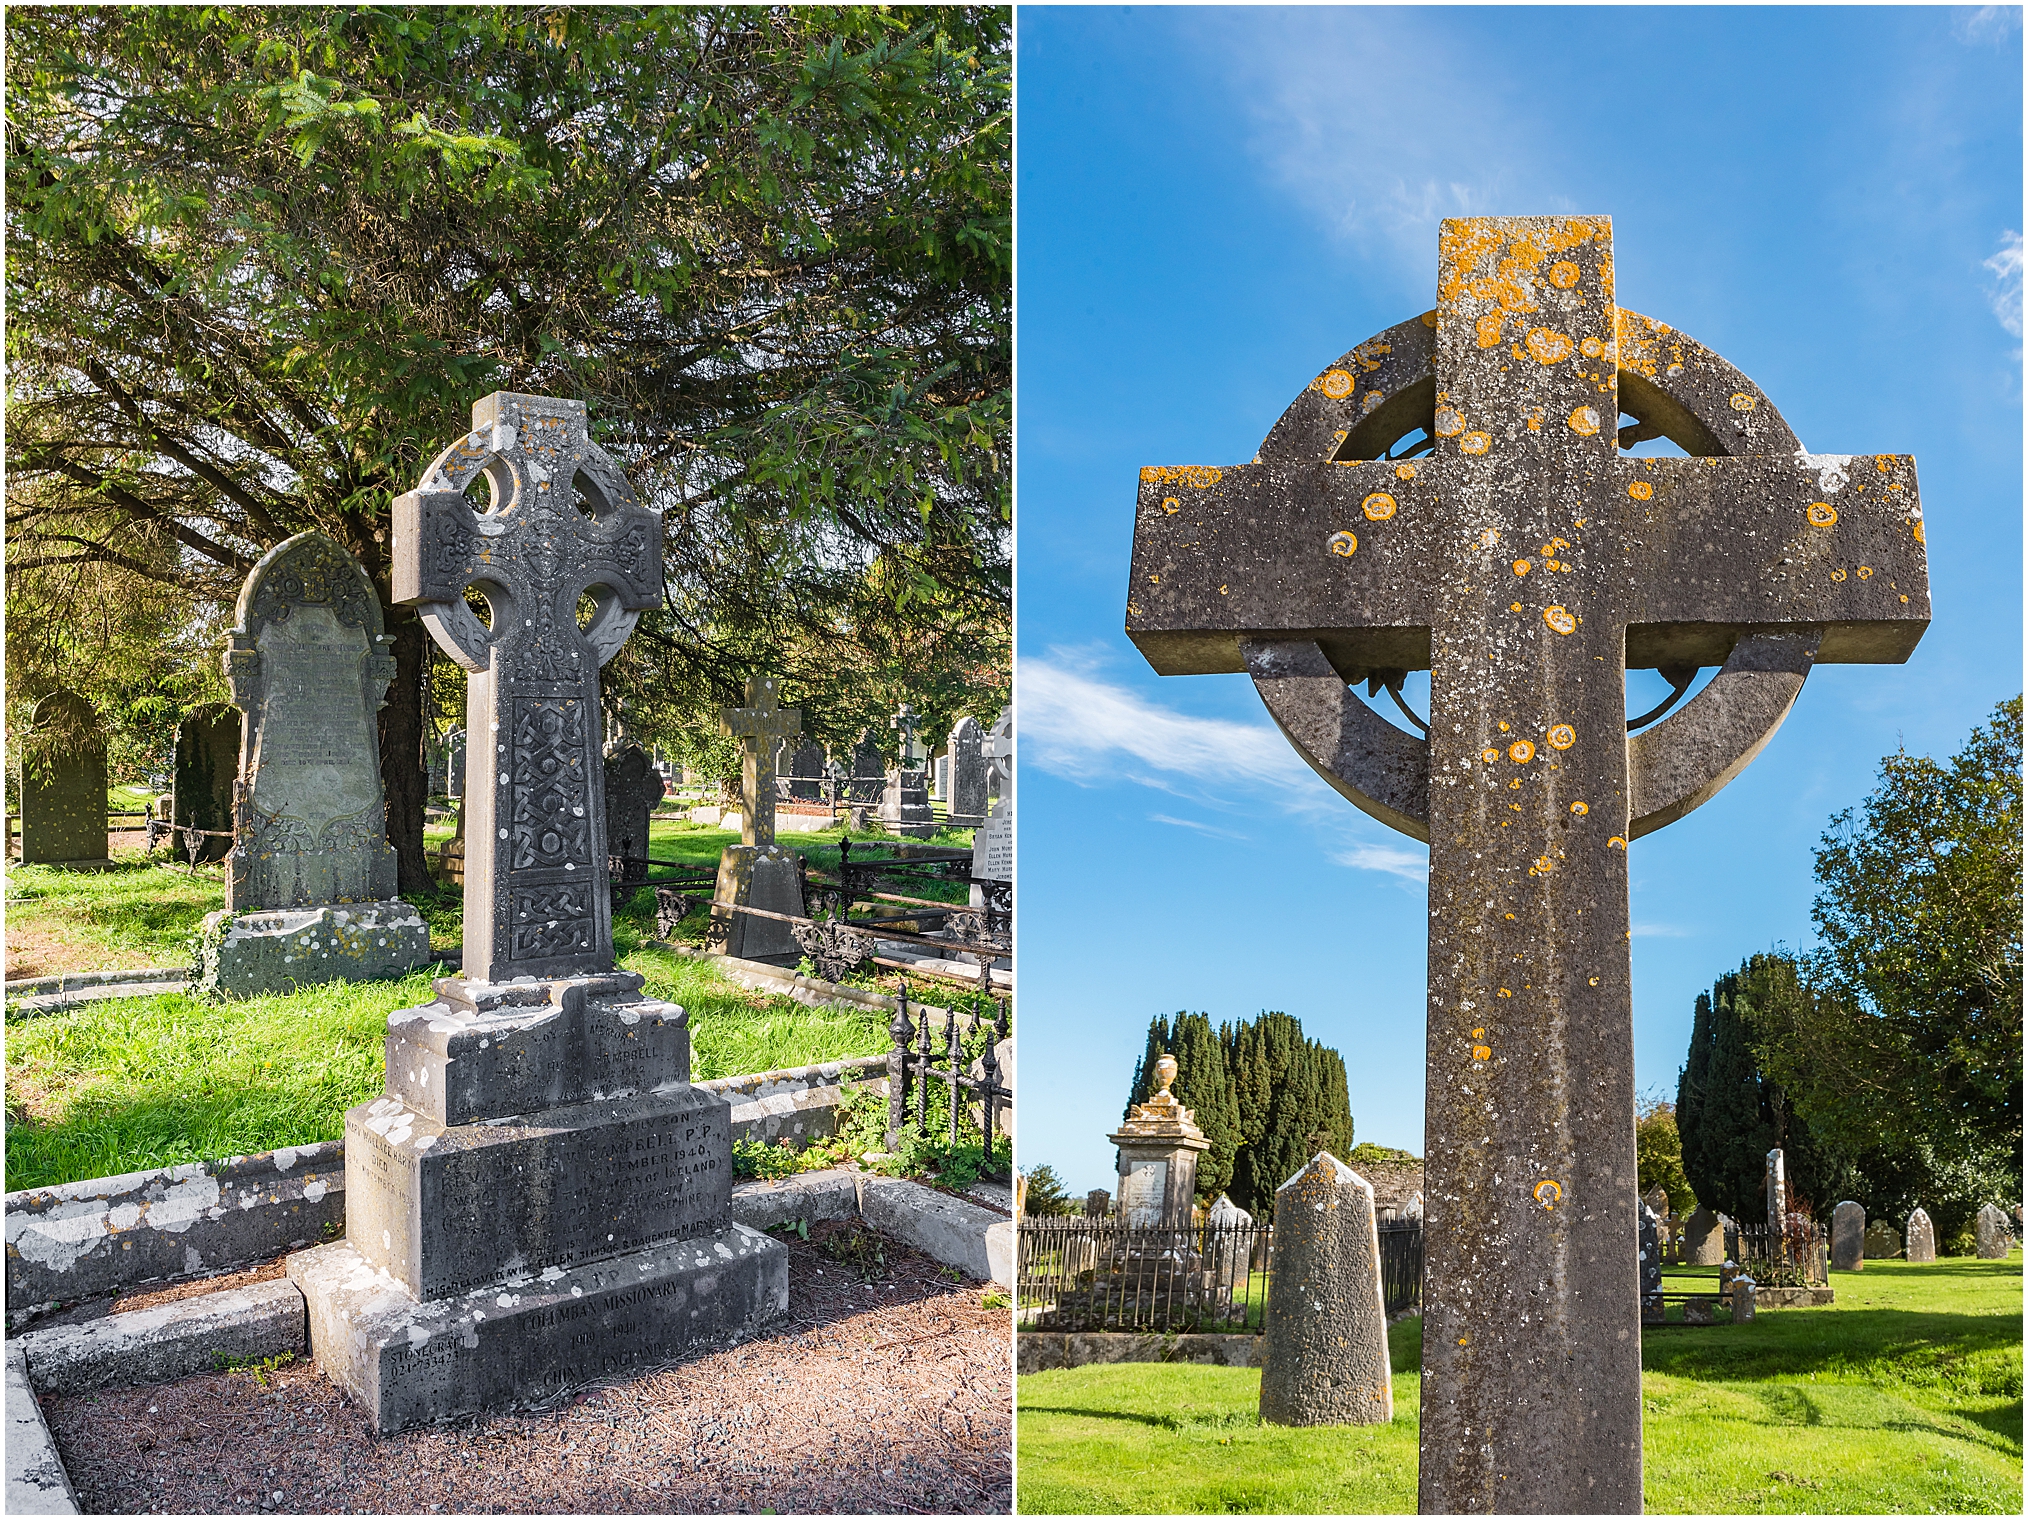 Cork, Munster, Ireland; Lusitania Graves